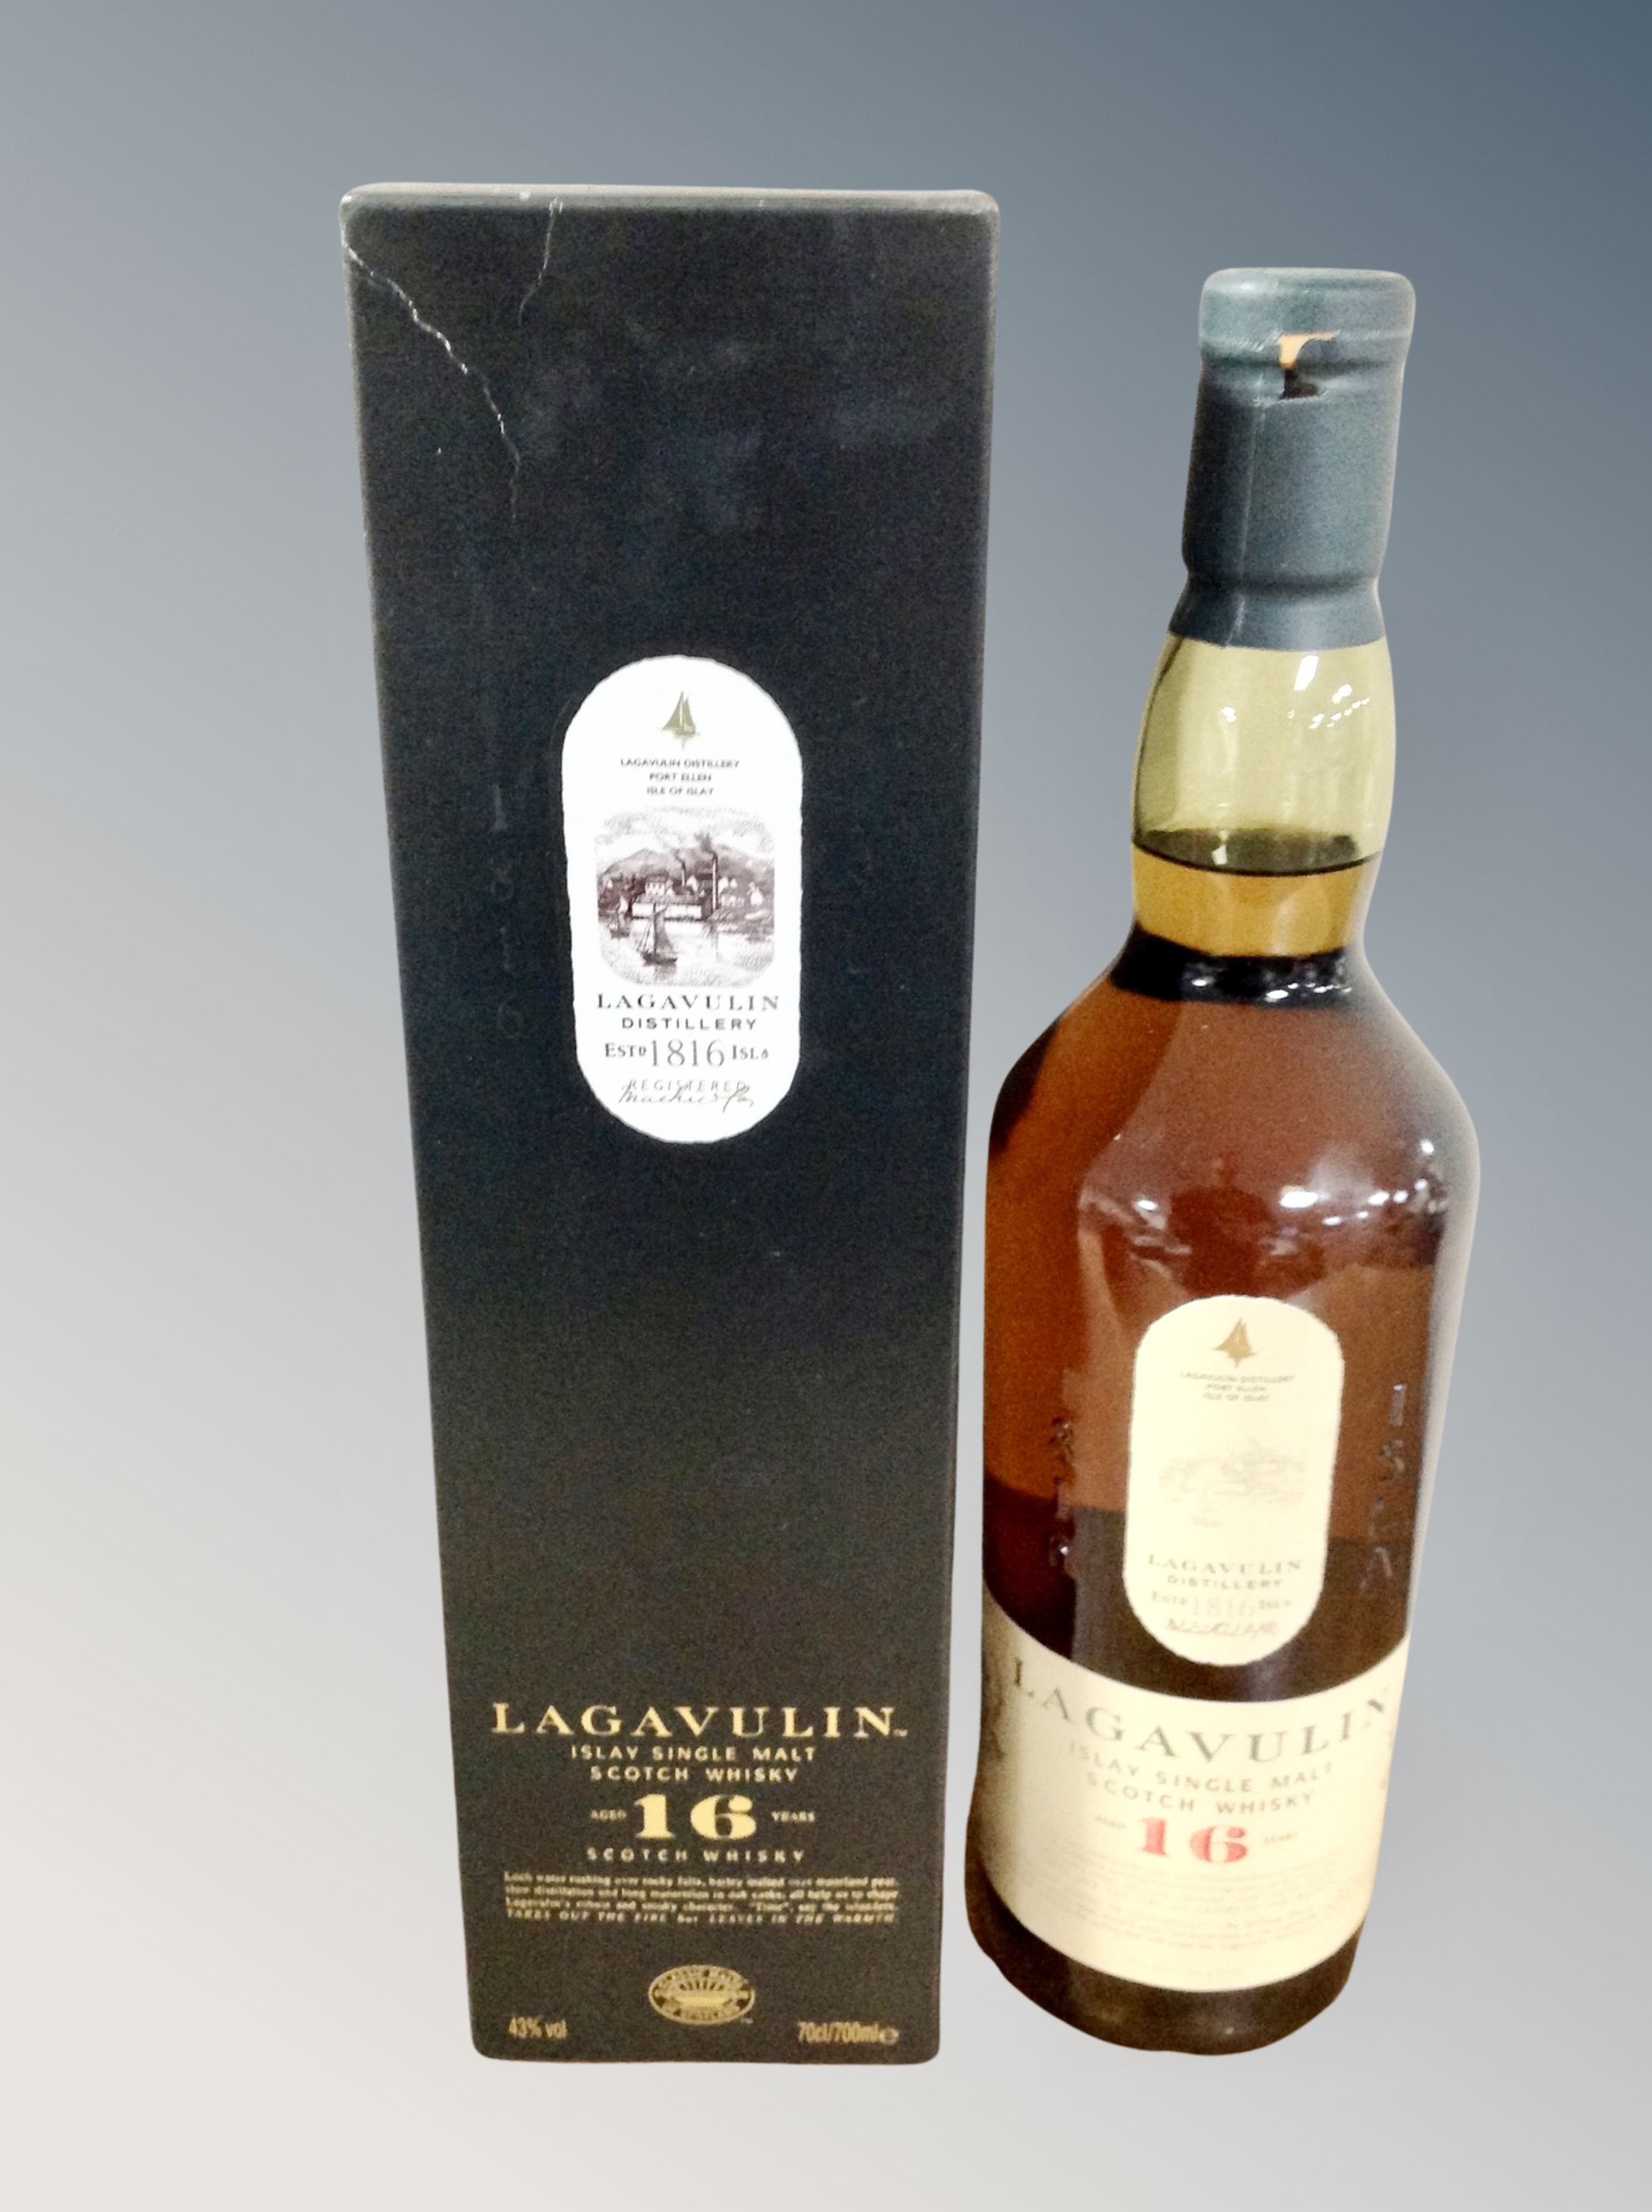 A bottle of Lagavulin Islay single malt scotch whisky aged 16 years 70cl 43% vol in presentation